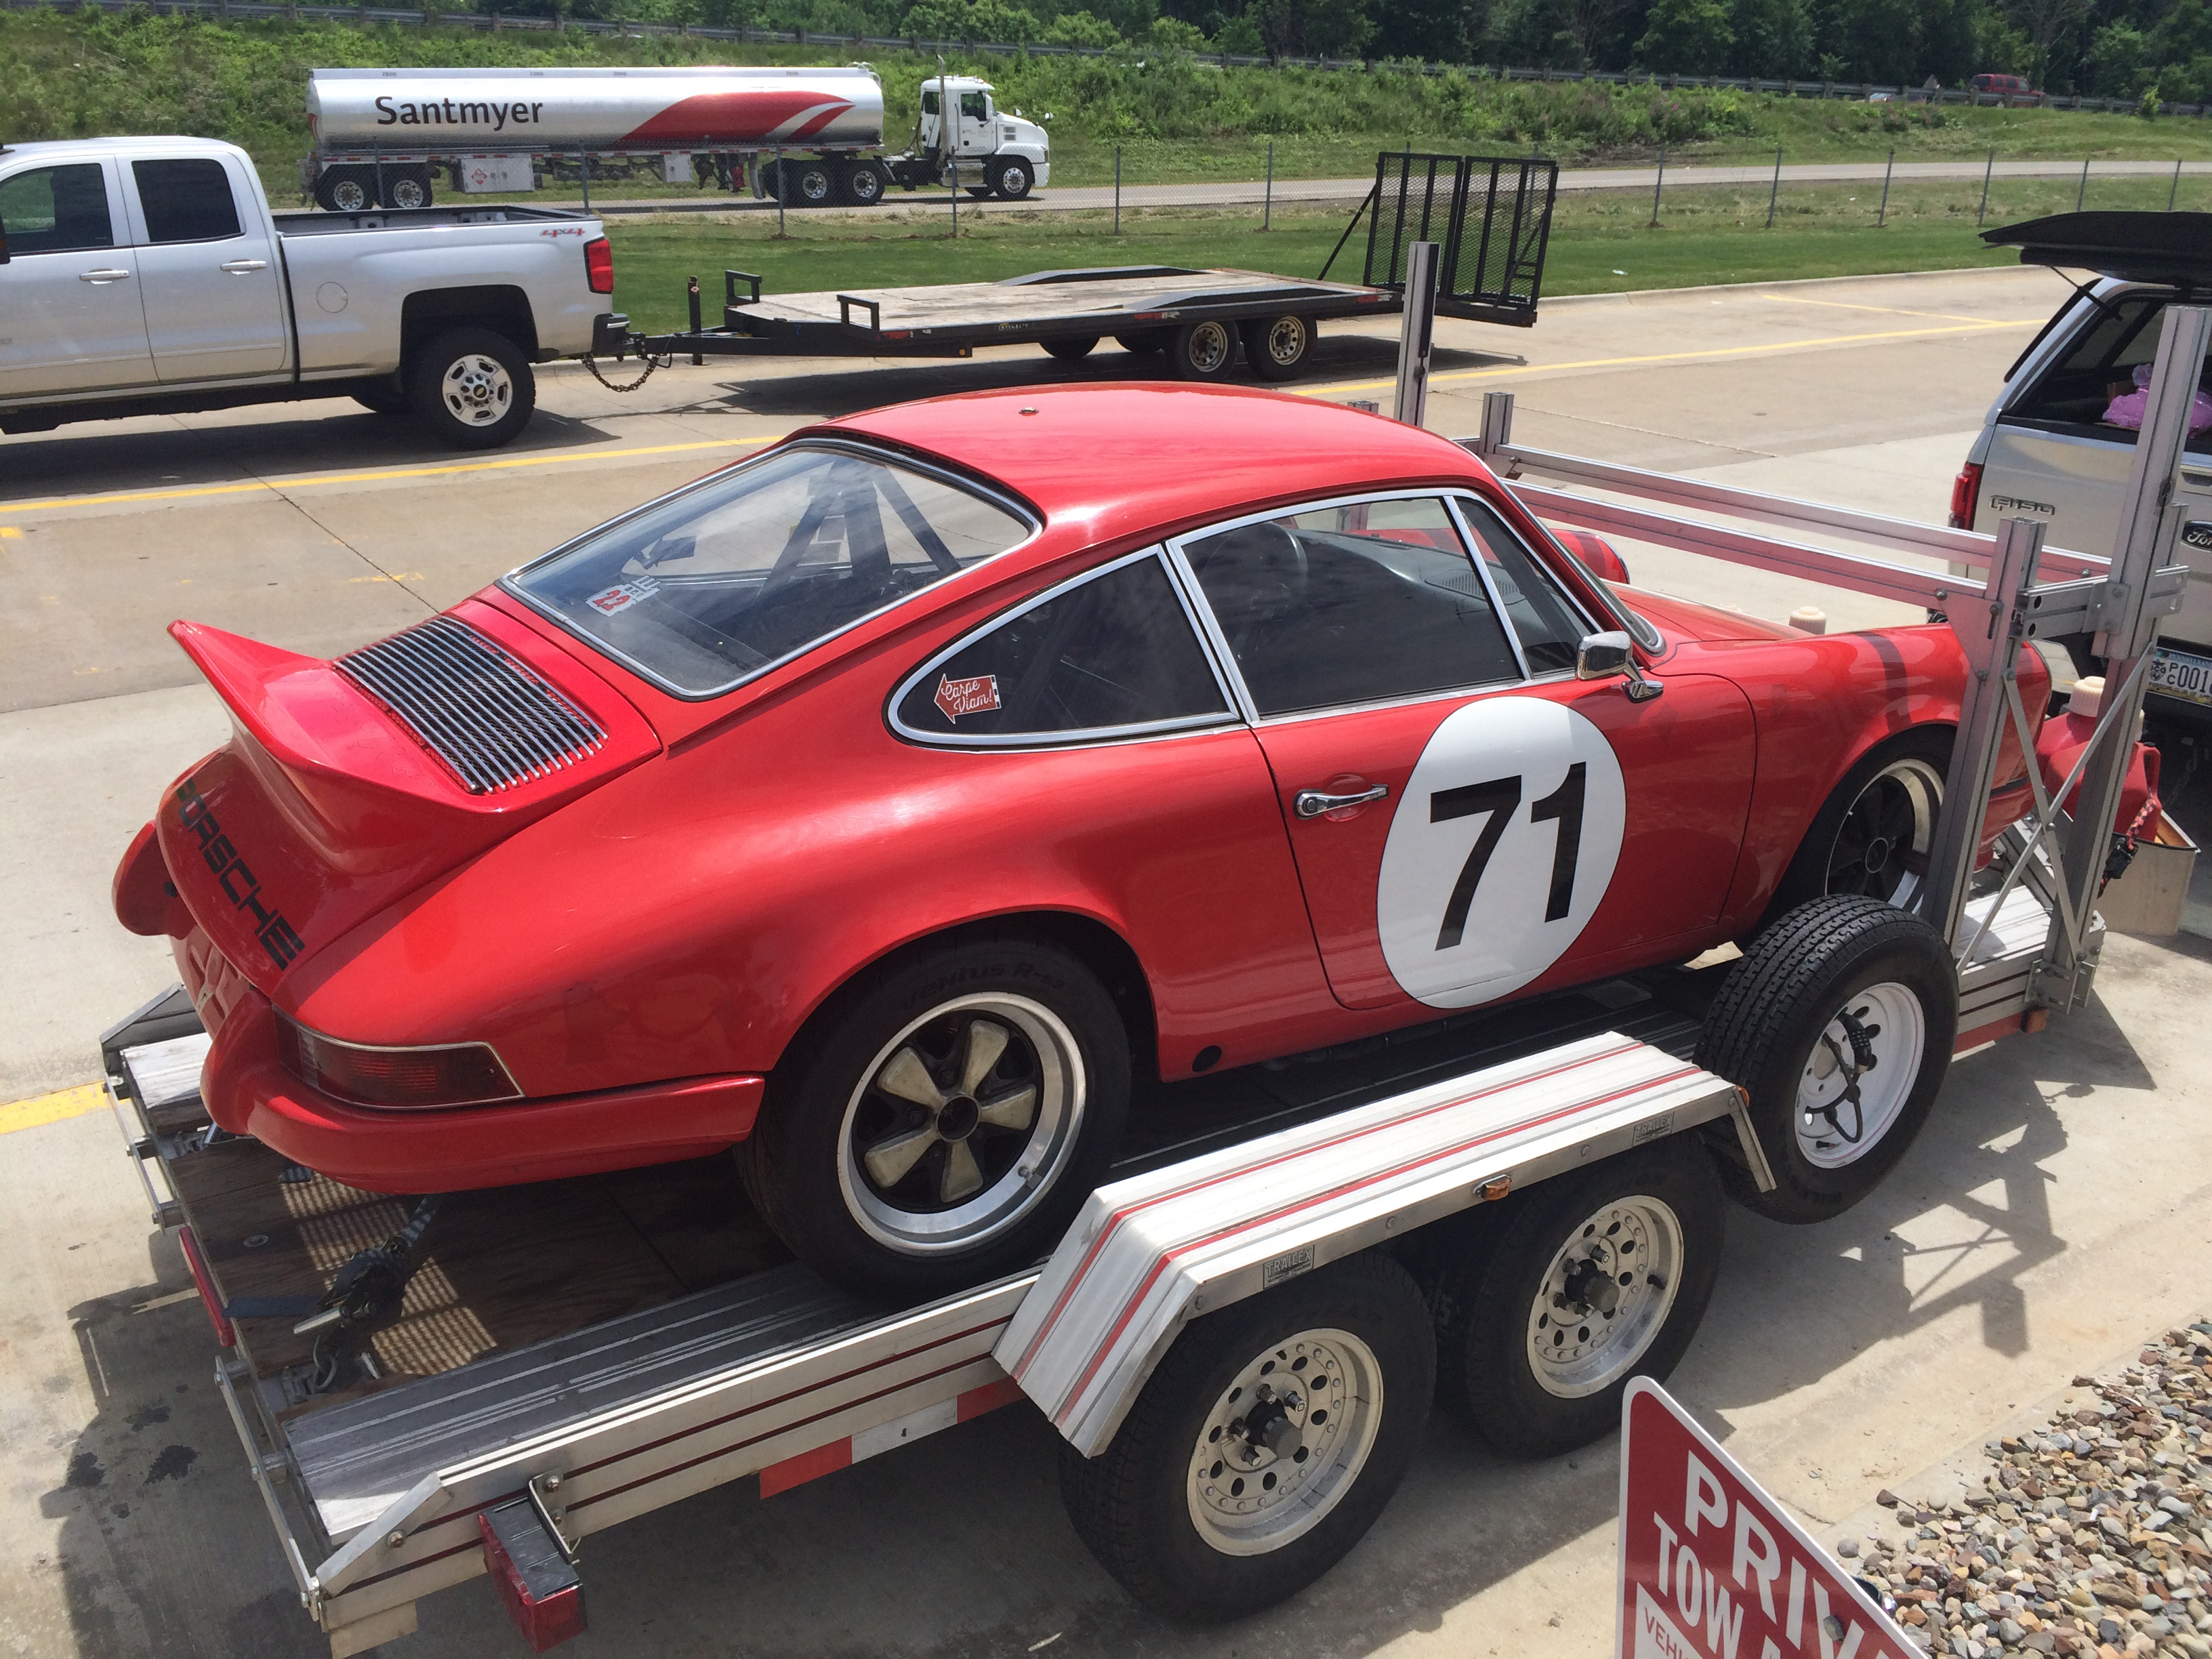 Lot Shots Find of the Week: 1971 Porsche 911 Track Car - OnAllCylinders